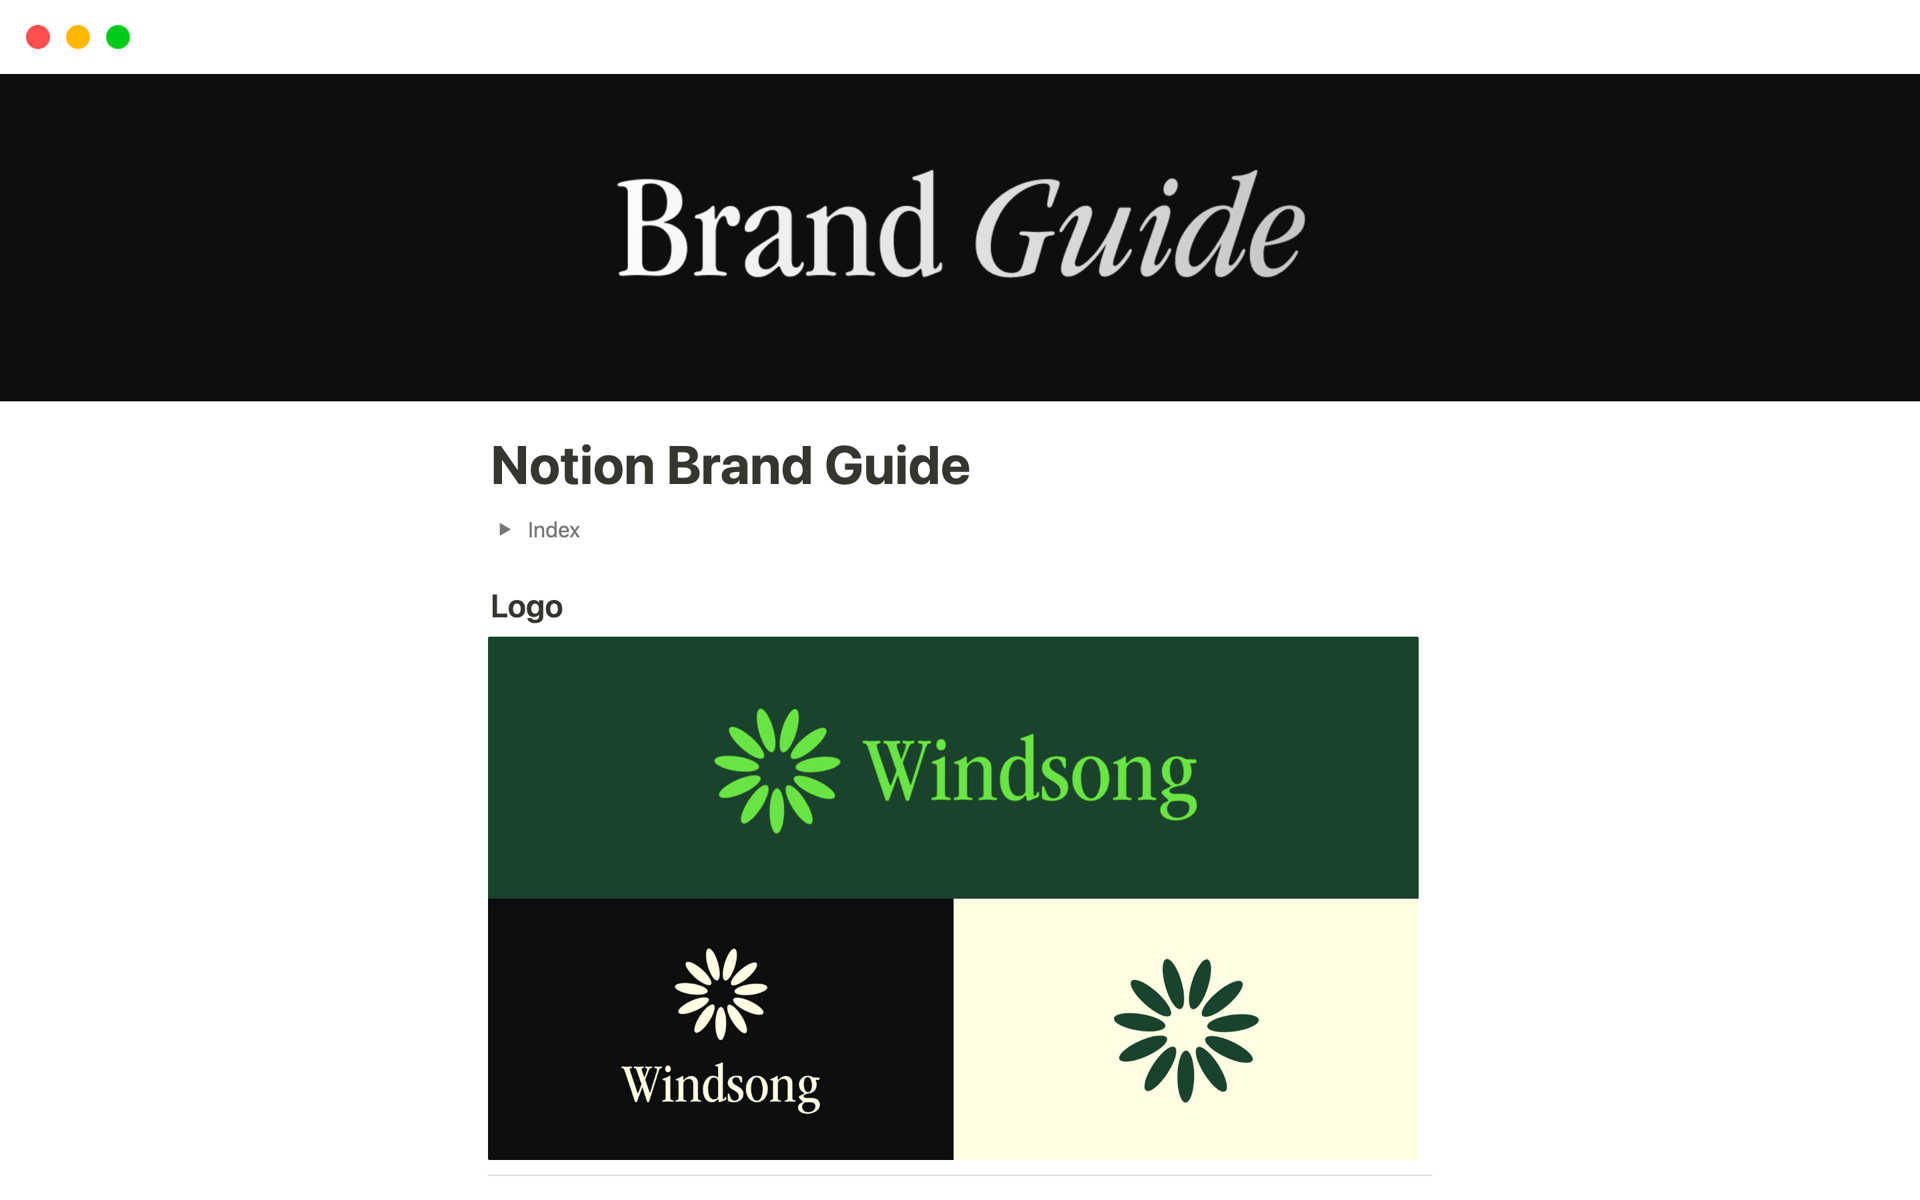 Vista previa de plantilla para Brand Guide